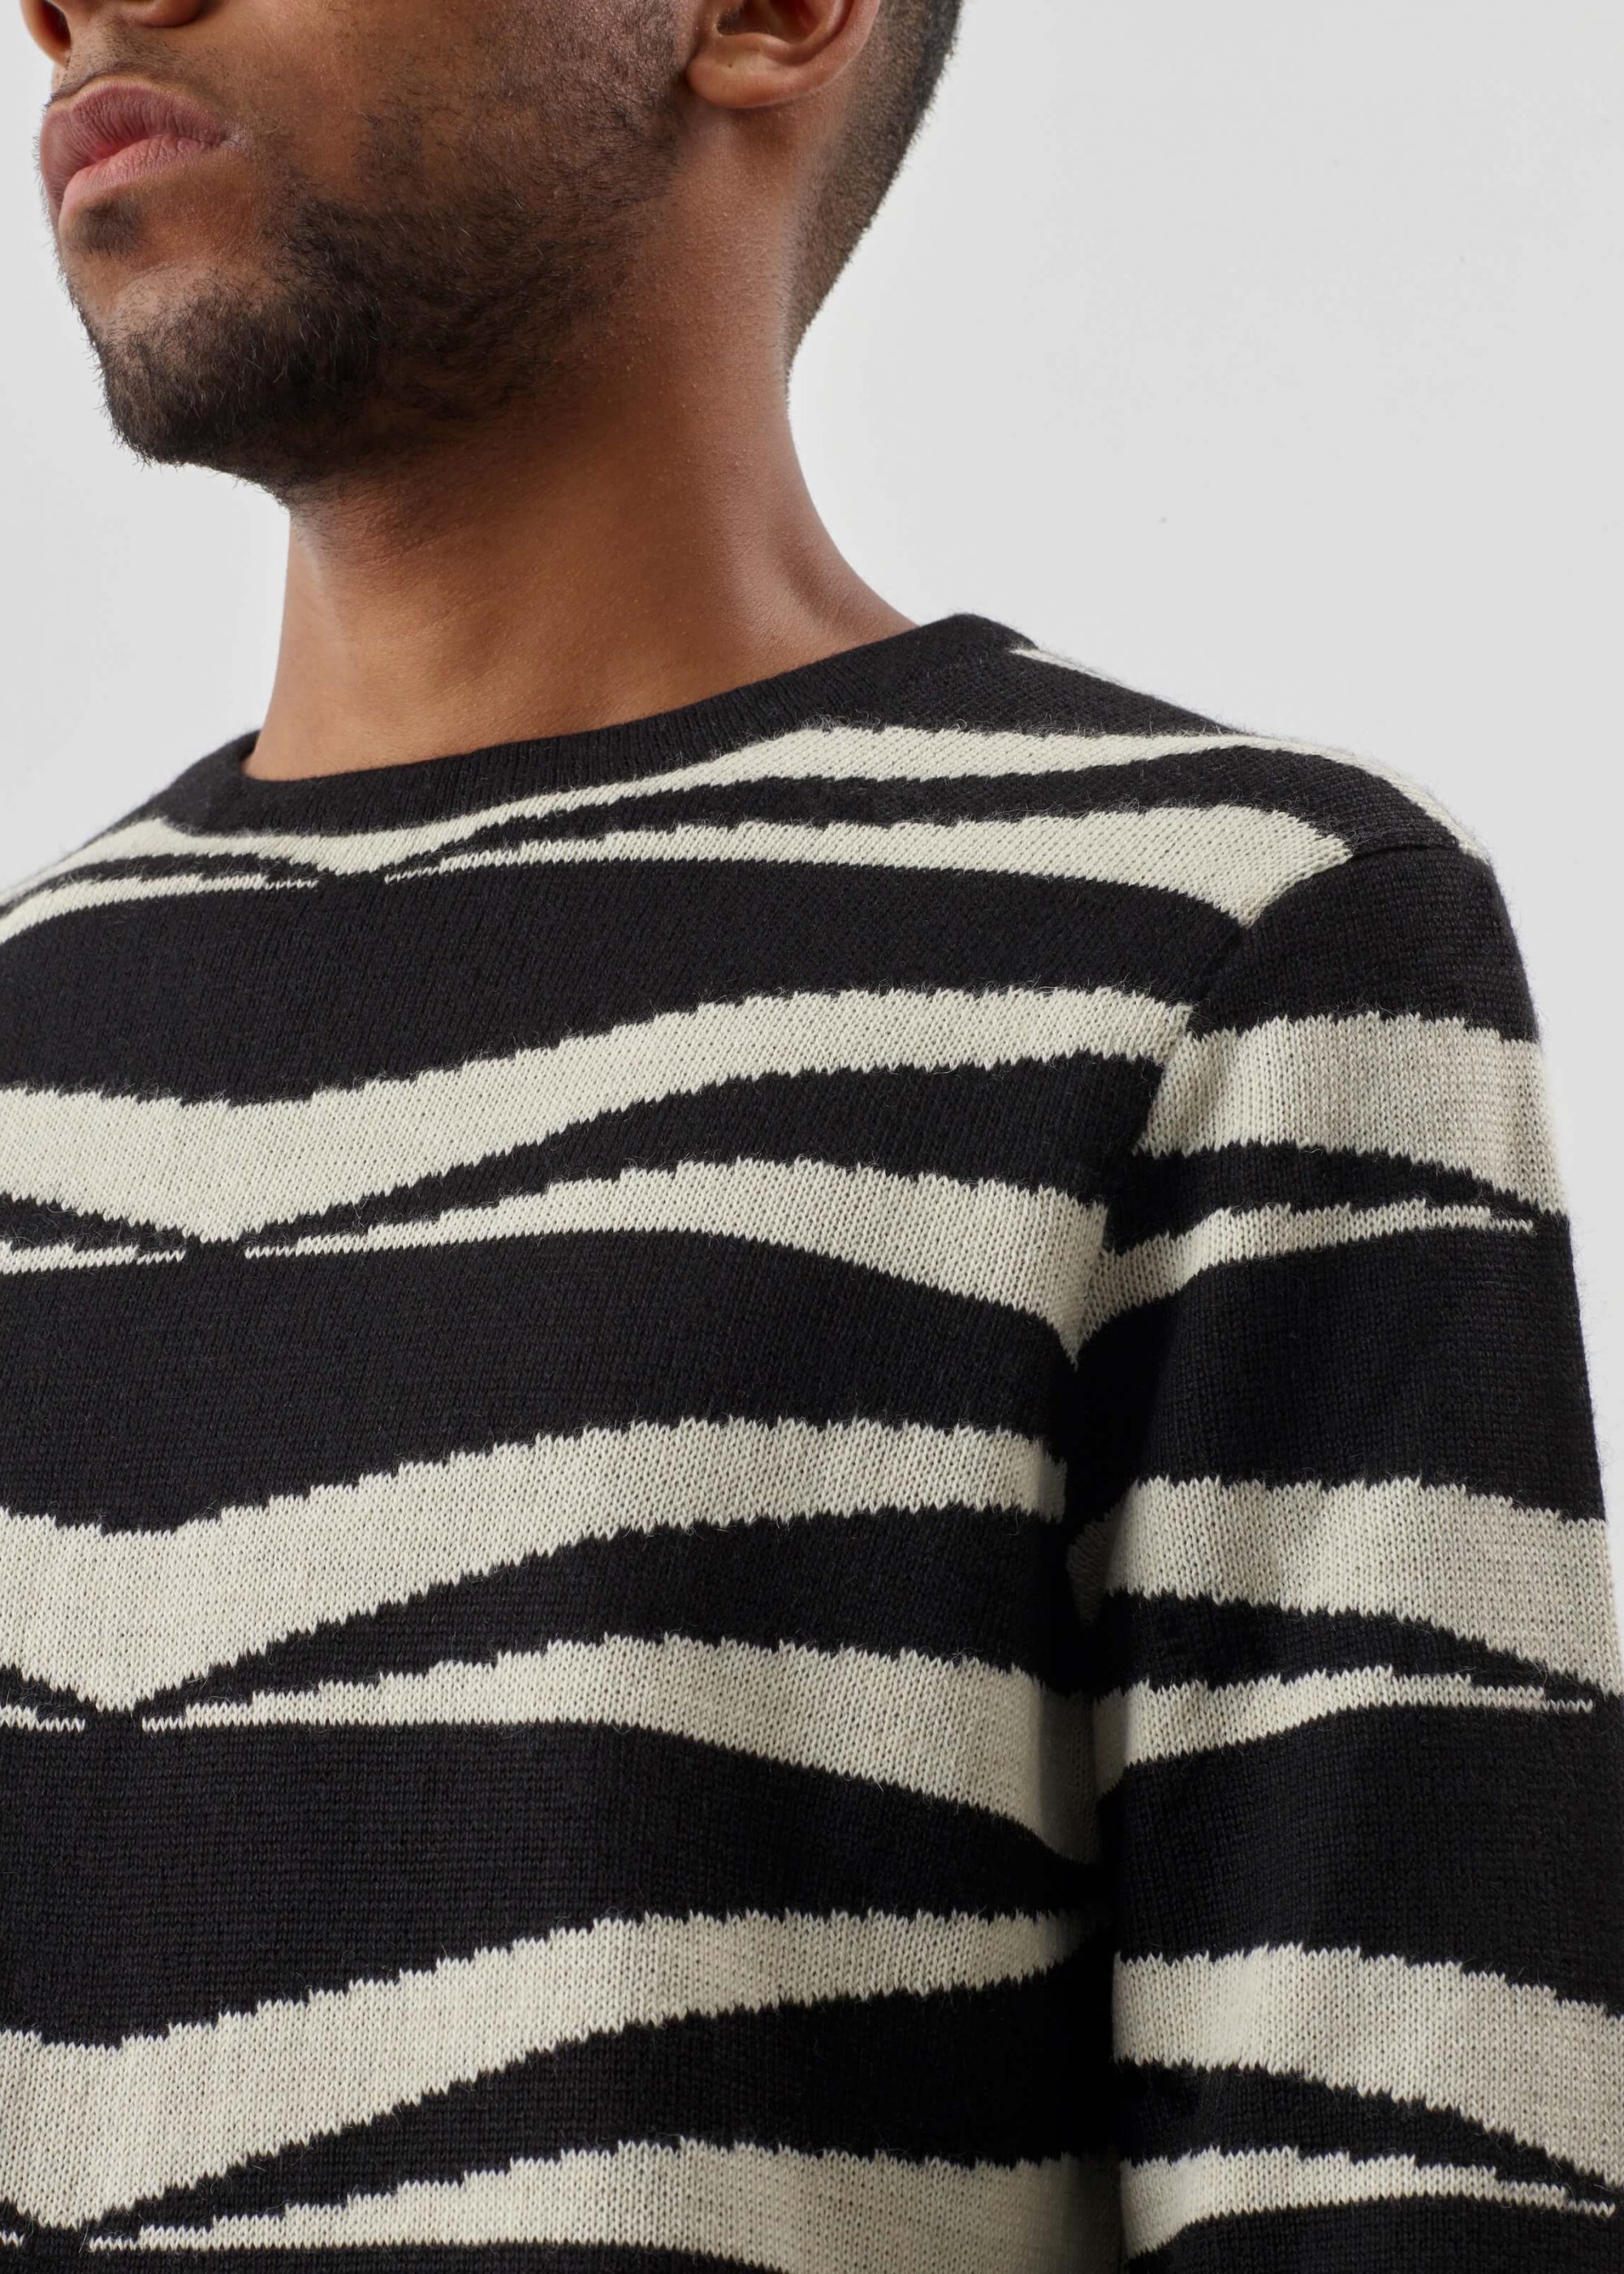 Product image for »Tao« Jacquard Sweater Baby Alpaca | Black Ecru